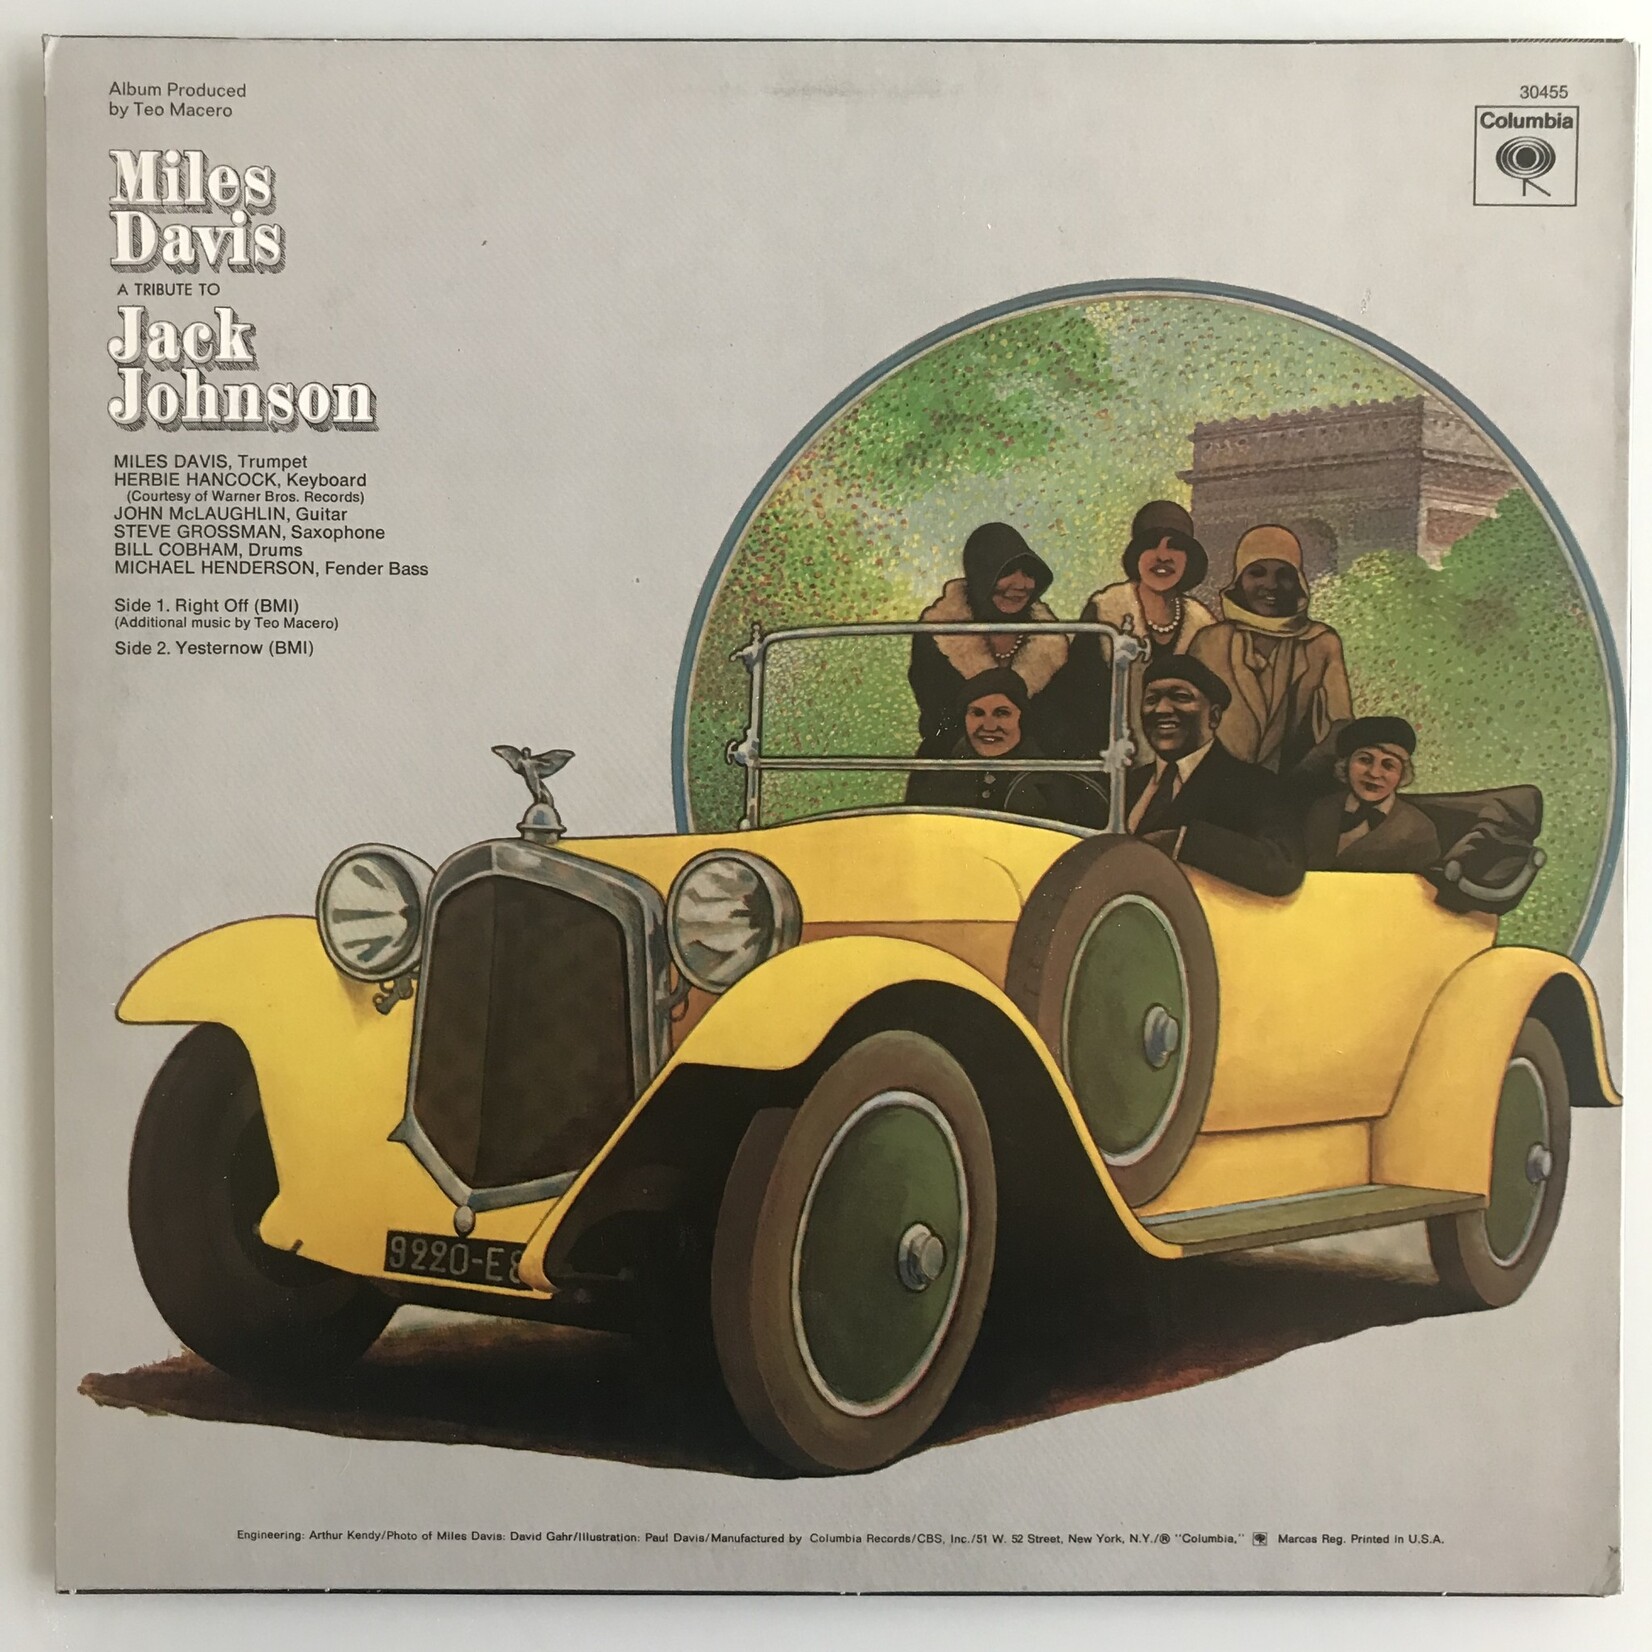 Miles Davis - A Tribute To Jack Johnson - 30455 - Vinyl LP (USED)